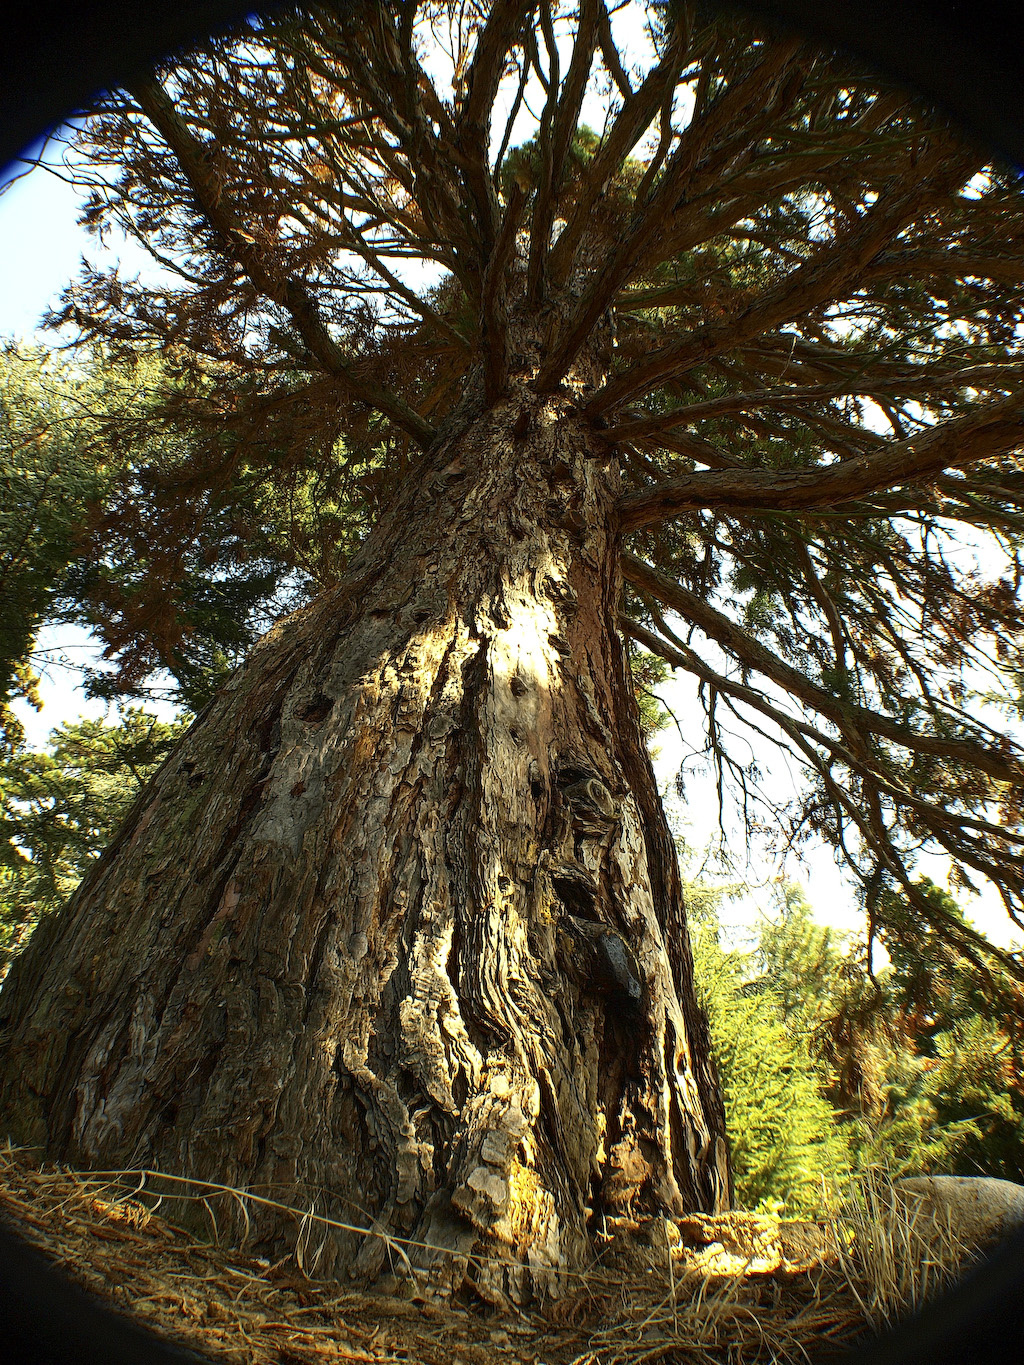 Mammutfenyő (Sequoiadendron giganteum)